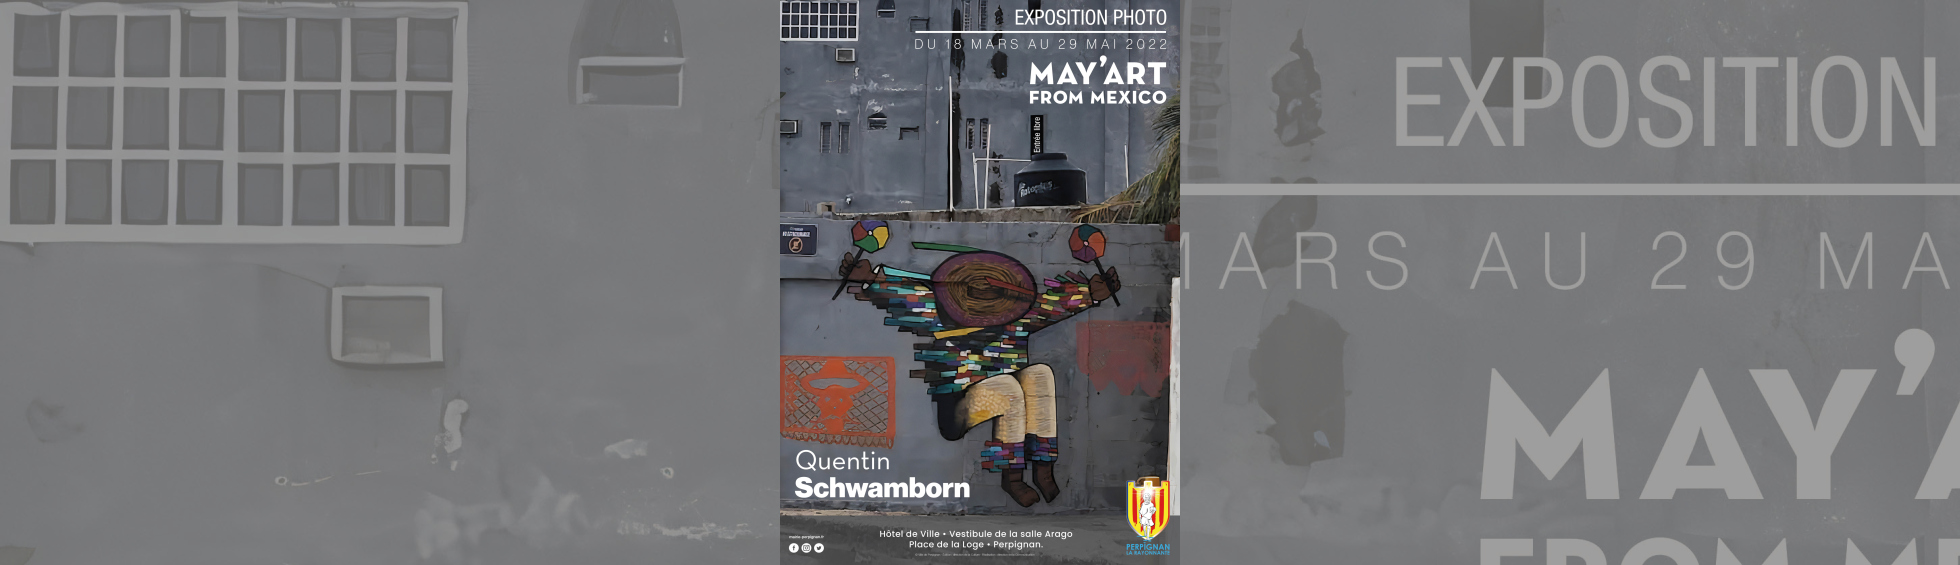 affiche exposition "May'art form Mexico" de Quentin Schwamborn